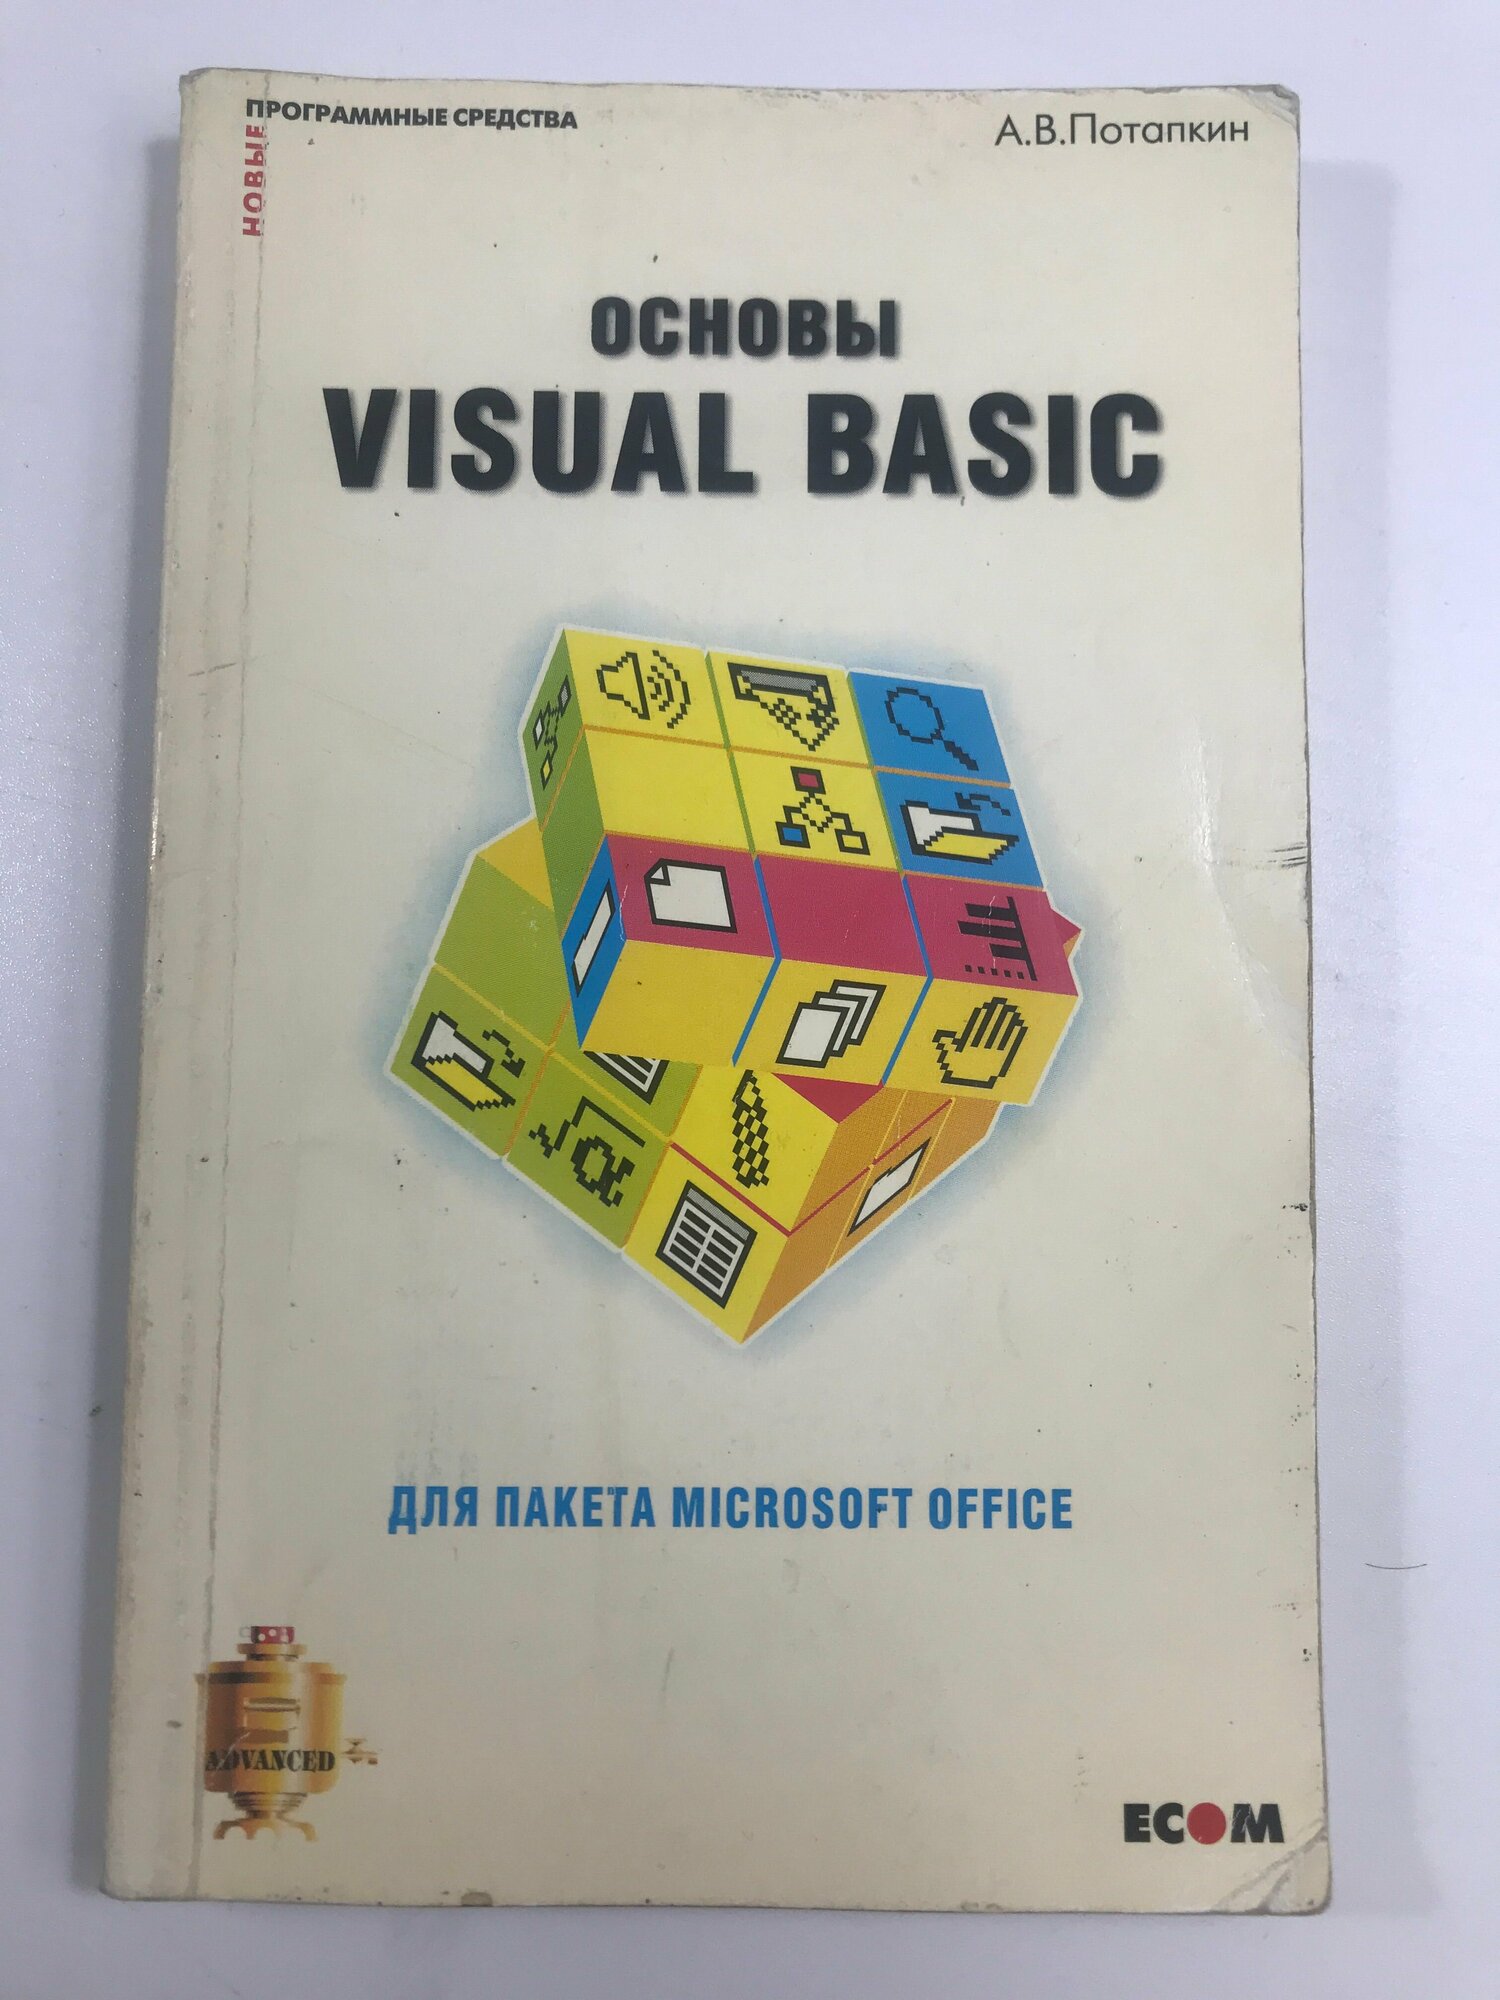 Потапкин А. В. Основы Visual Basic для пакета Microsoft Office